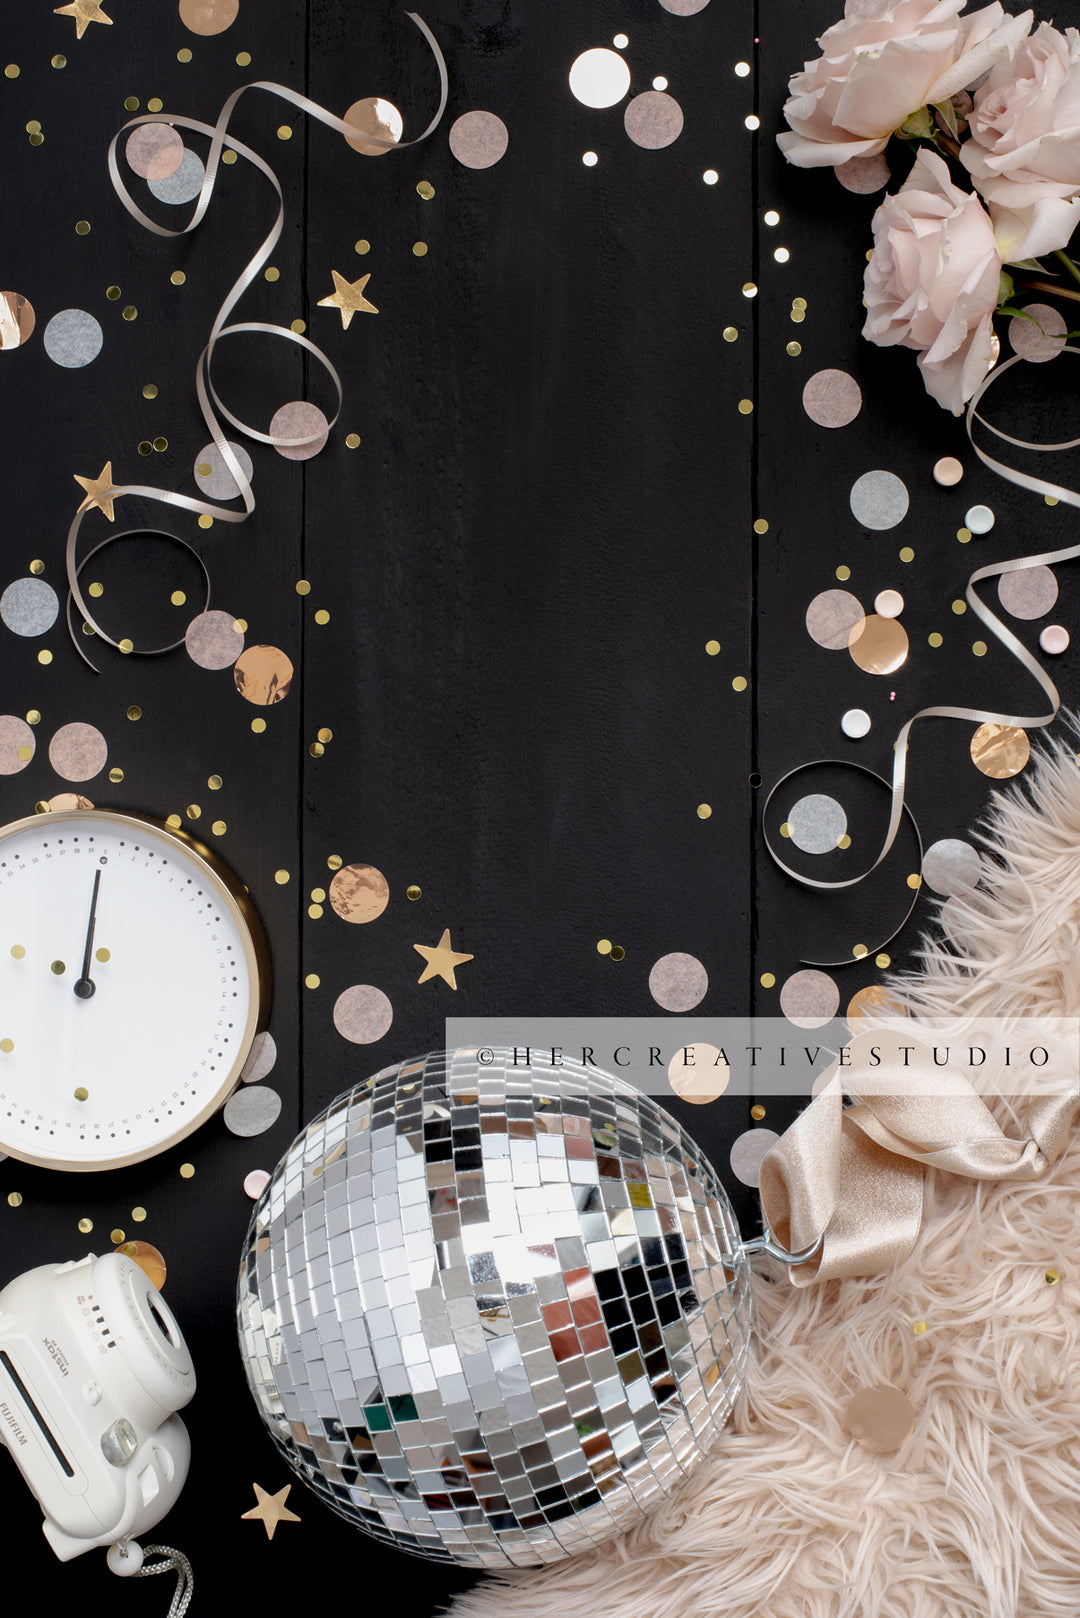 Disco Ball, Clock & Camera, New Year's Eve Stock Image